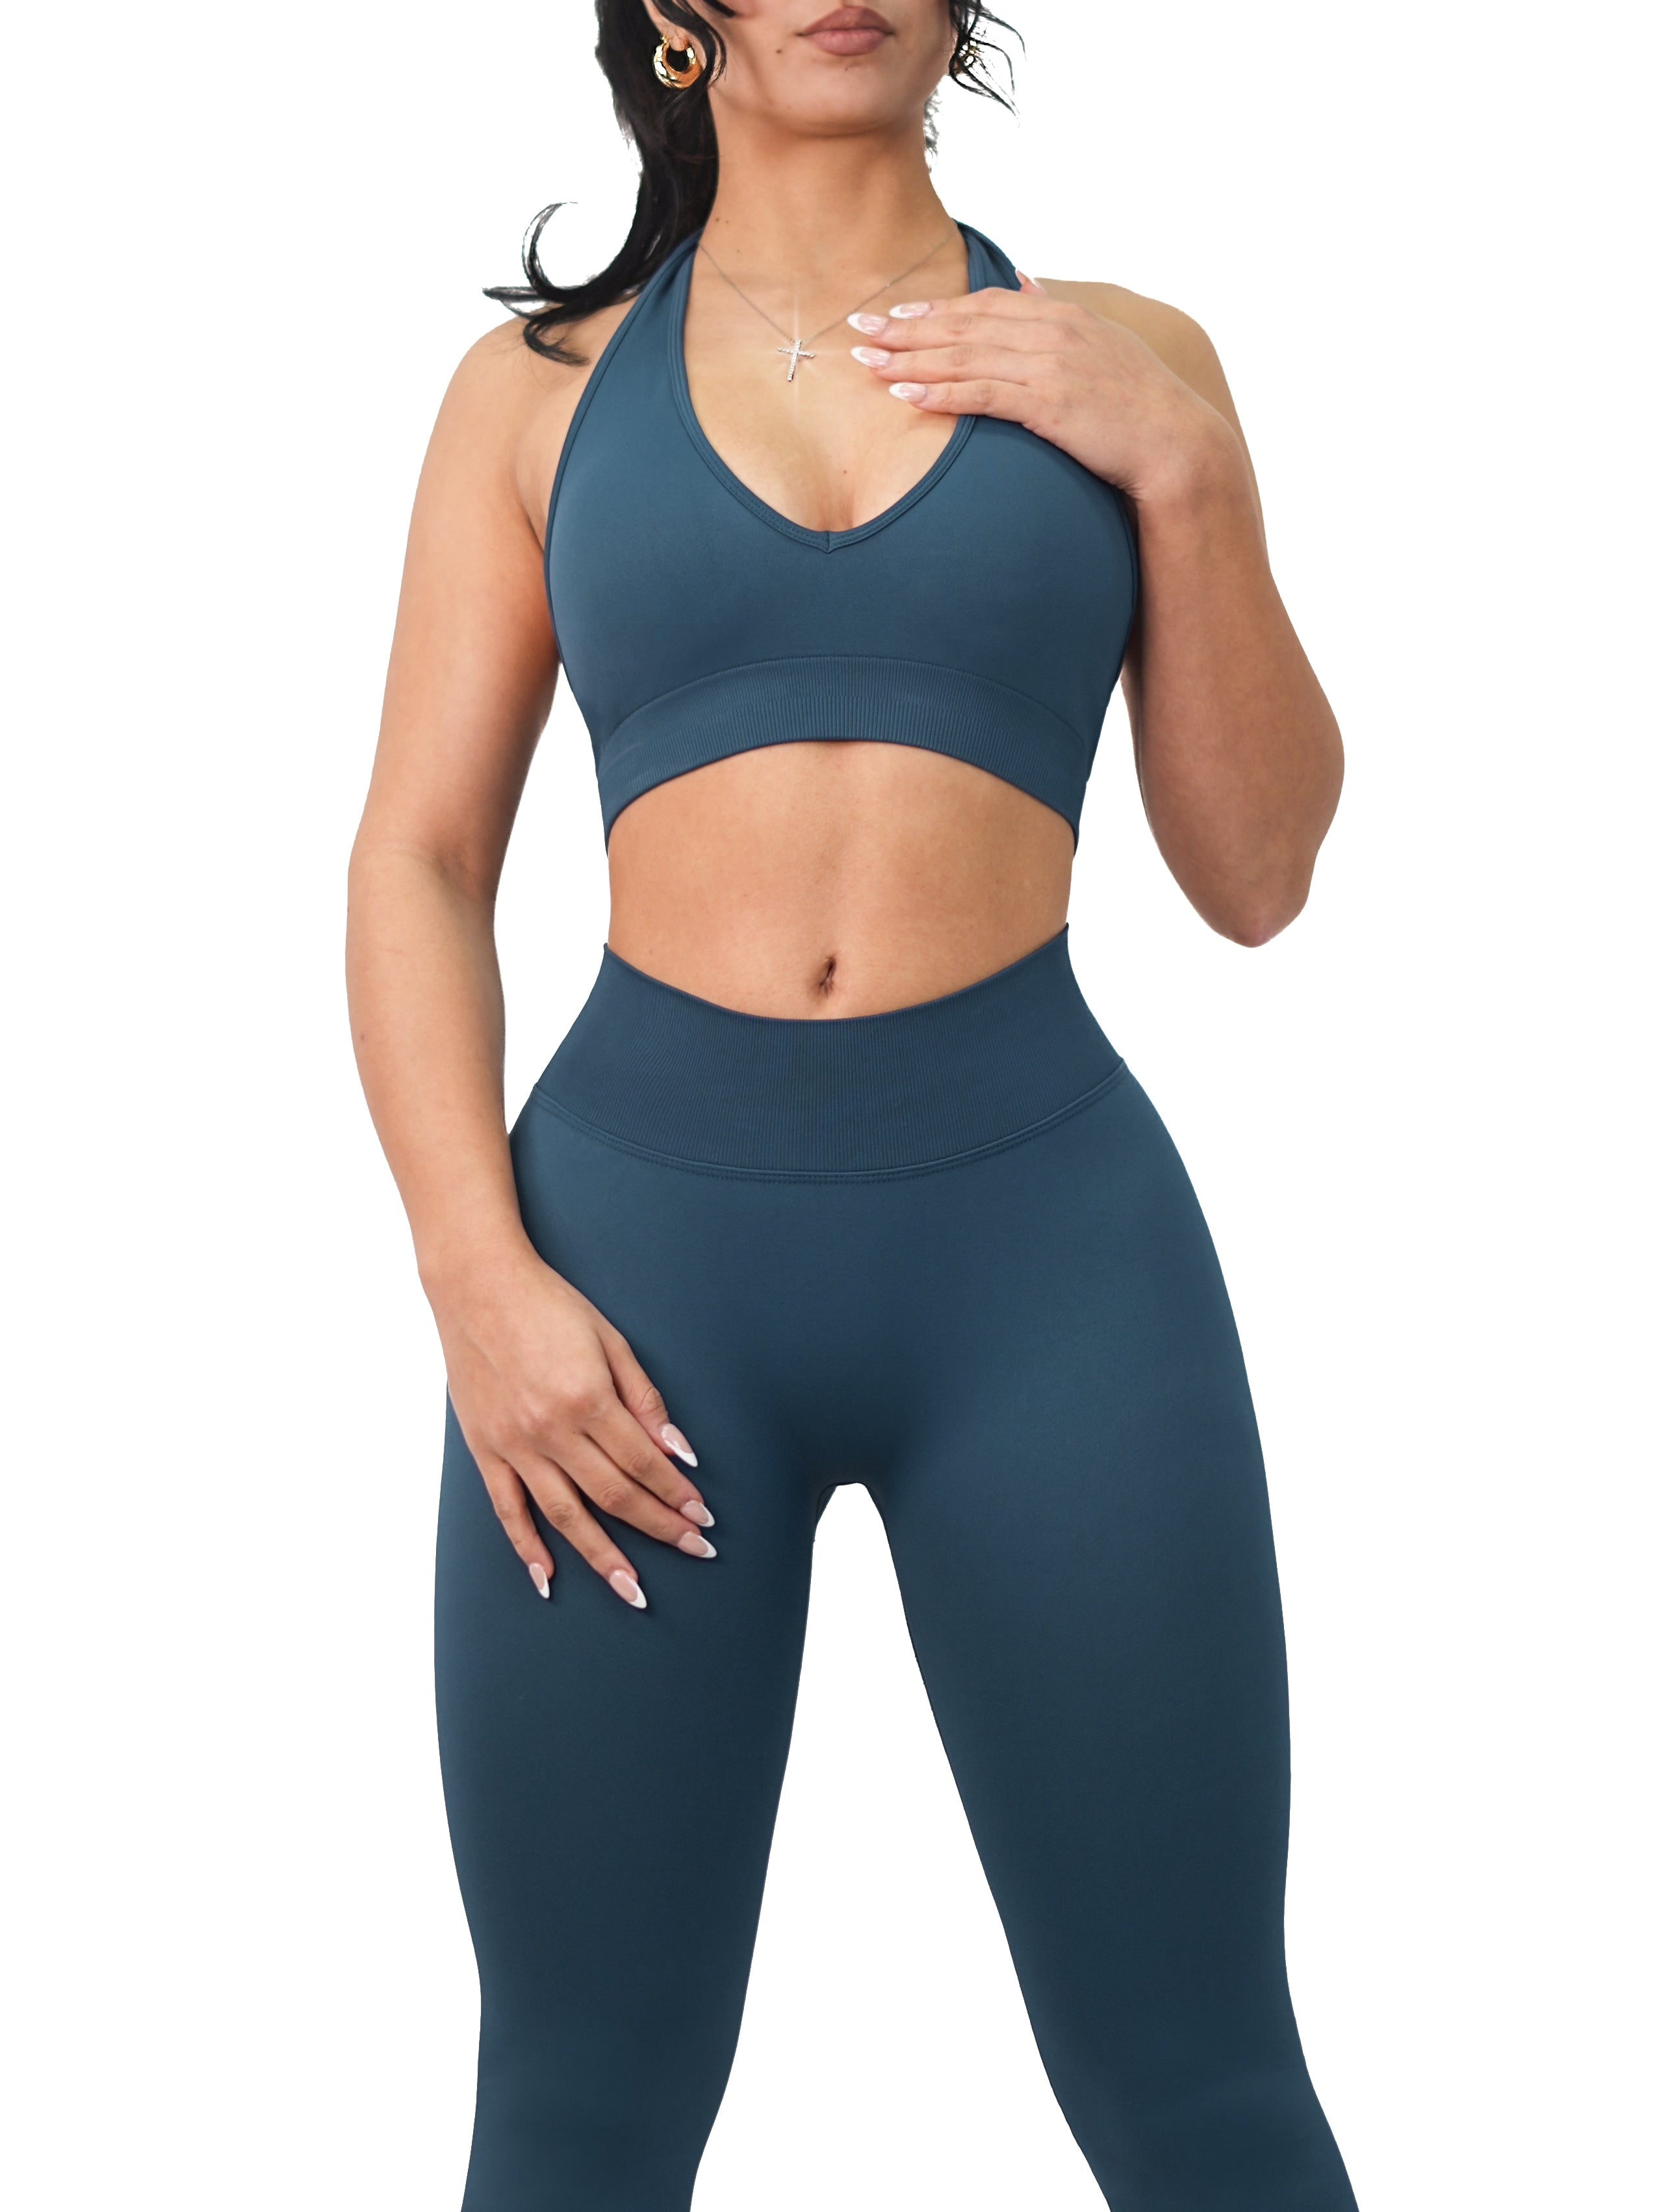 Athletic Halter Sports Bra (Navy Blue) – Fitness Fashioness